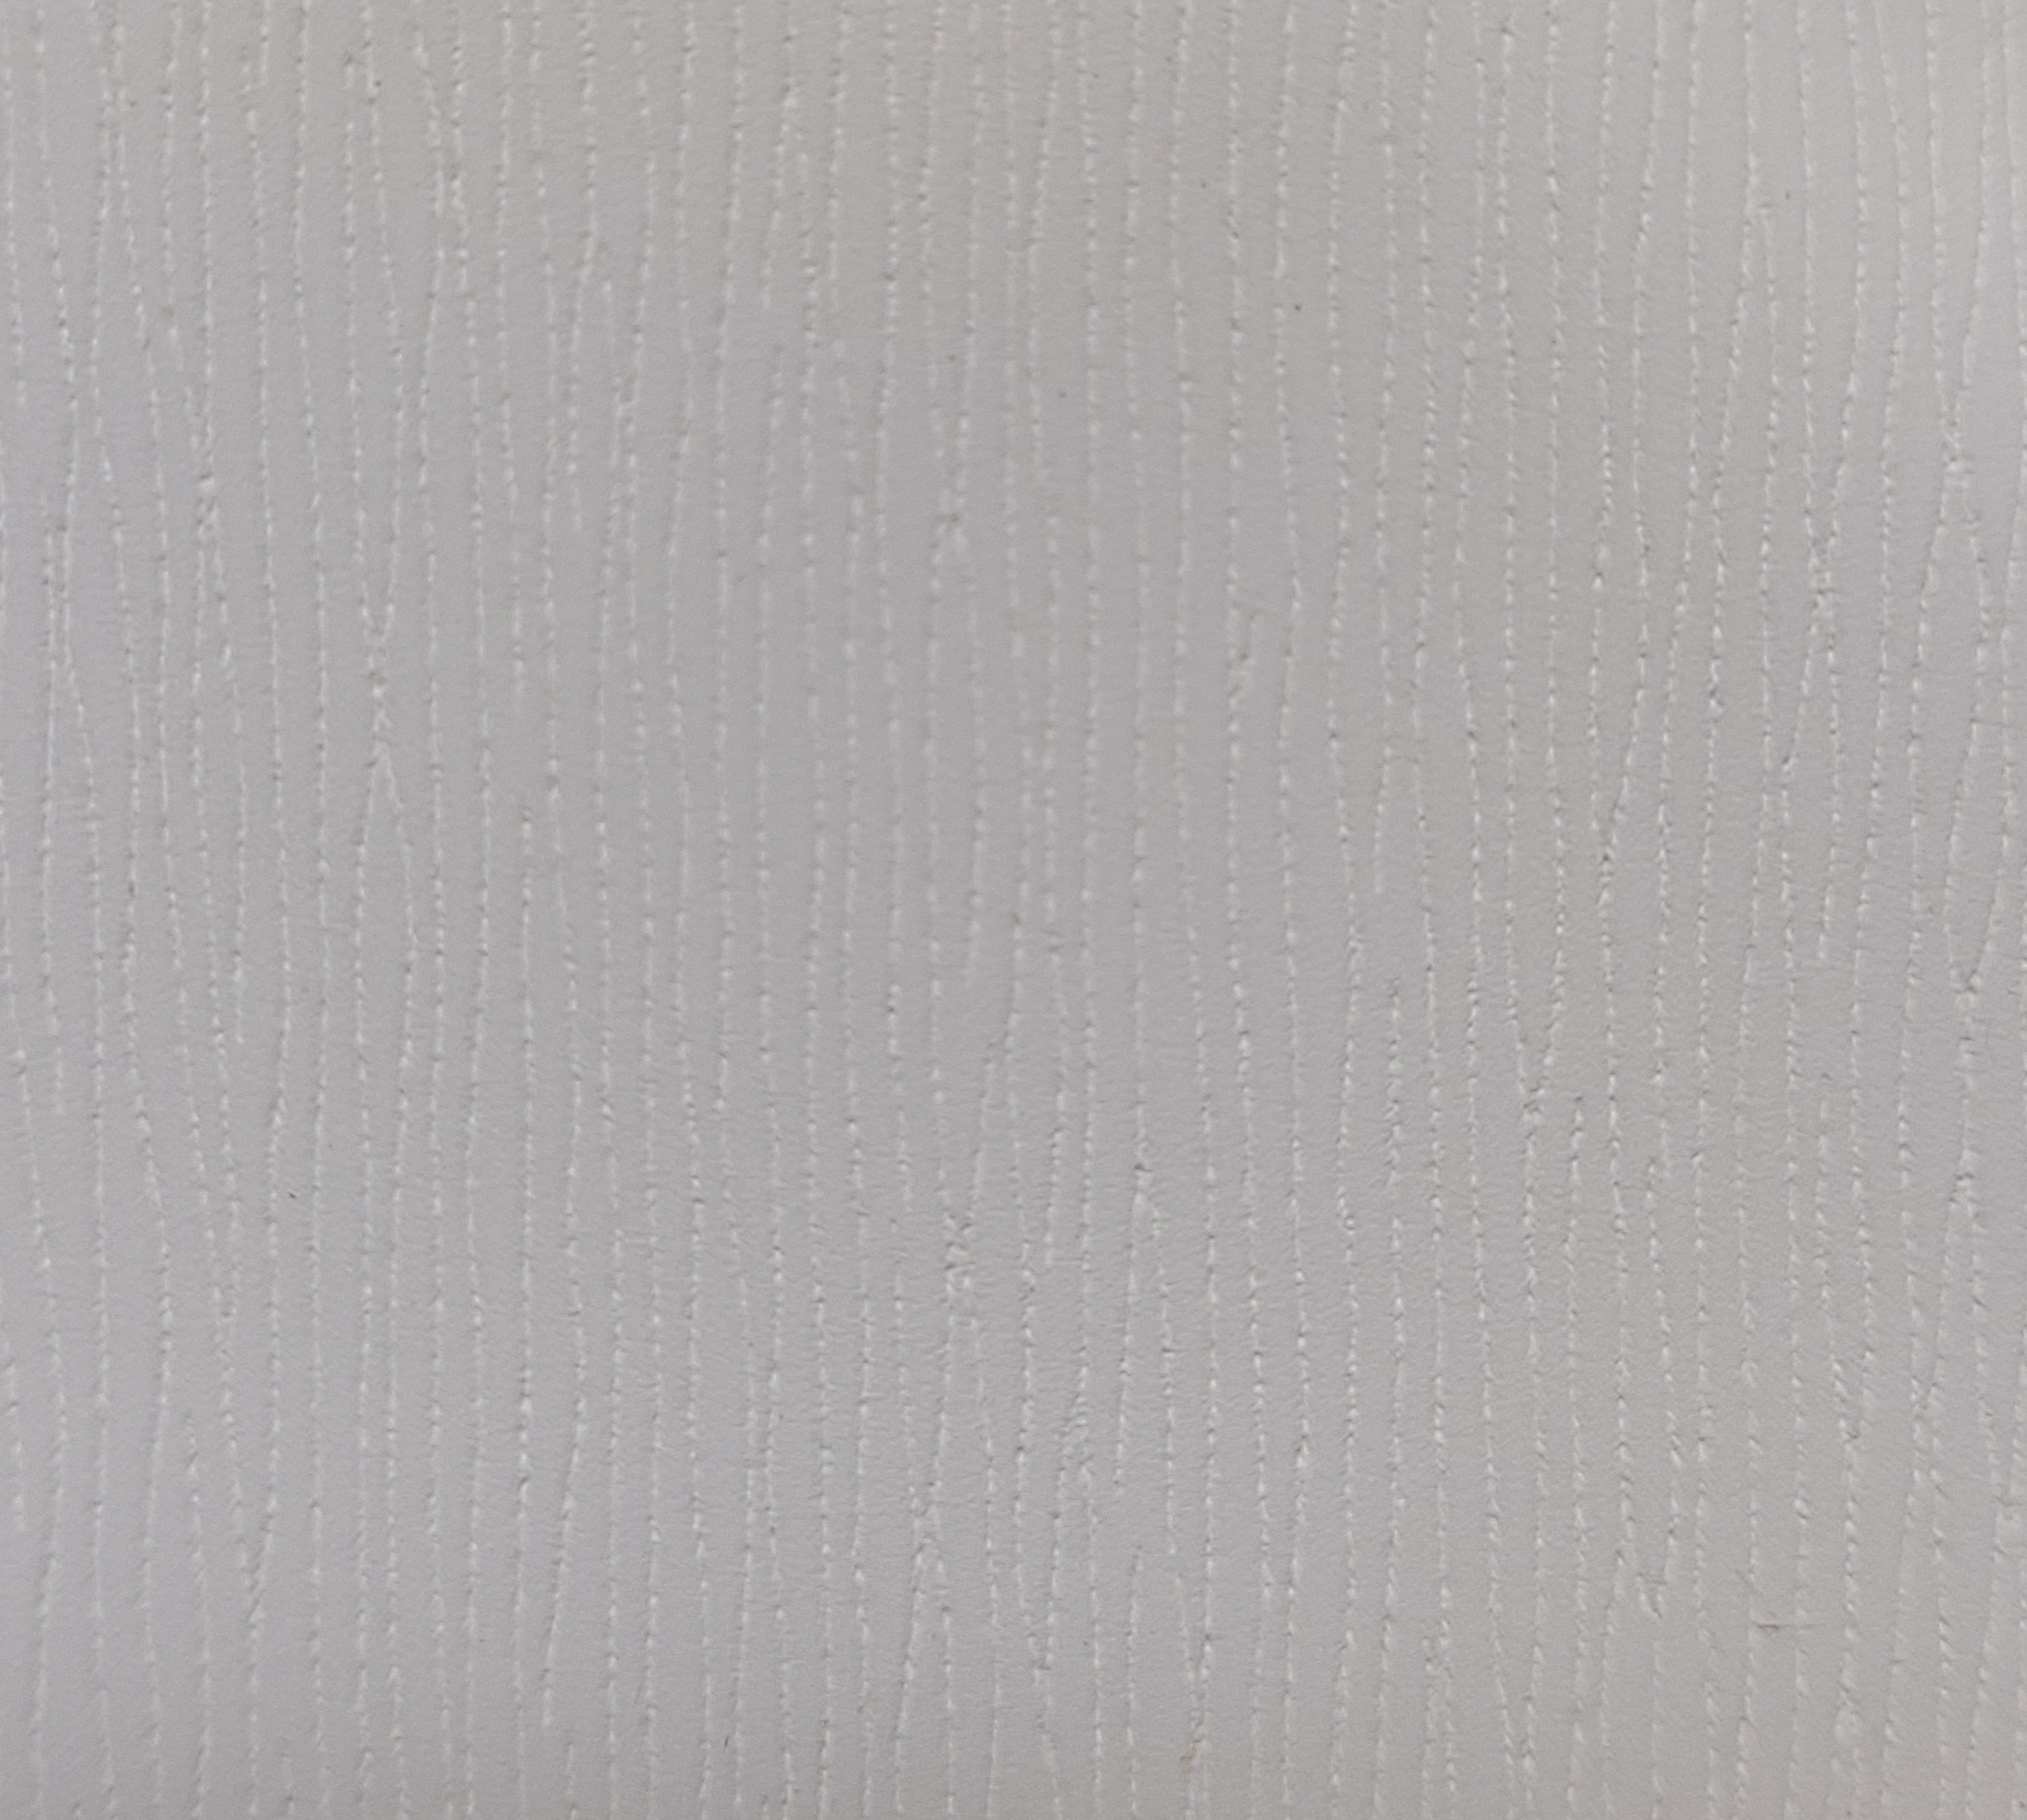 Stahl's CAD-CUT Soft Foam Heat Transfer Vinyl